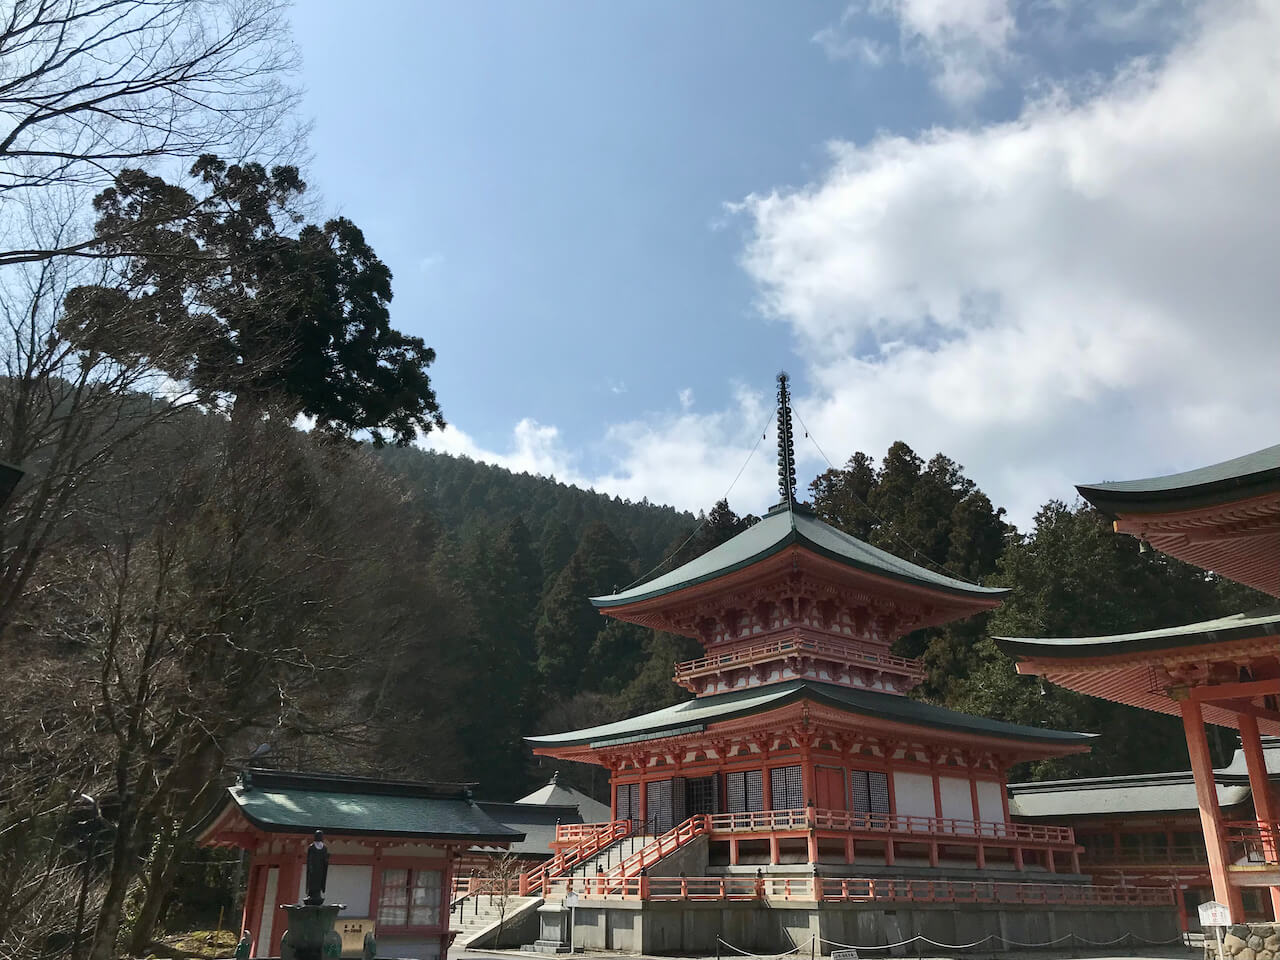 Hieizan Enryakuji Temple in Shiga